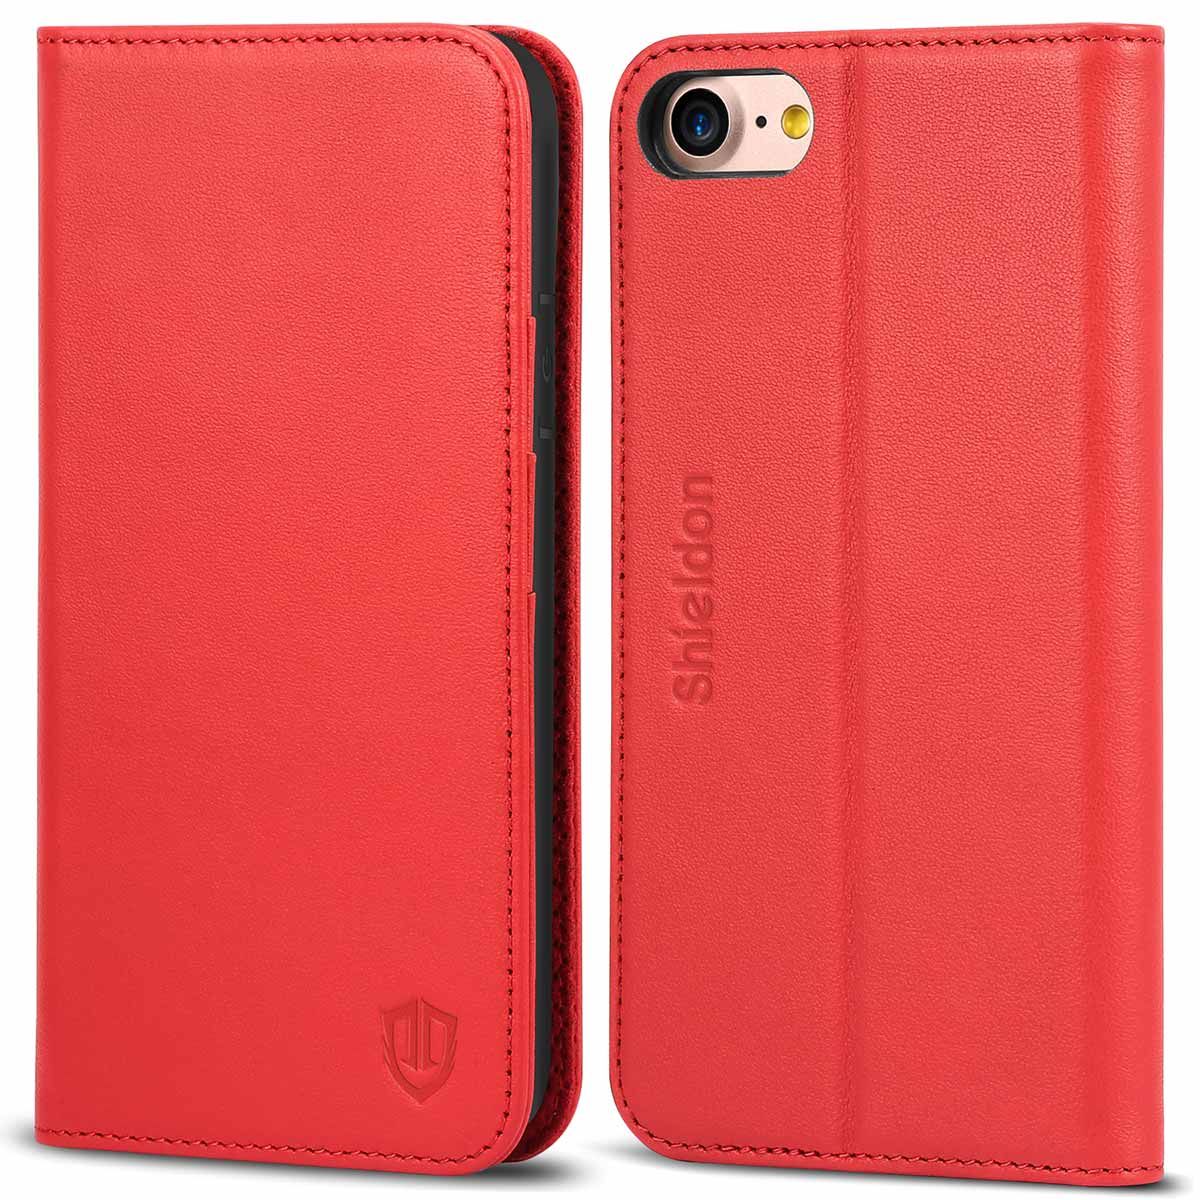 spiegel einde Uitgaven SHIELDON iPhone 8 Genuine Leather Wallet Case, Magnet Closure, Kickstand  Function, Flip Cover, Folio Style,Red